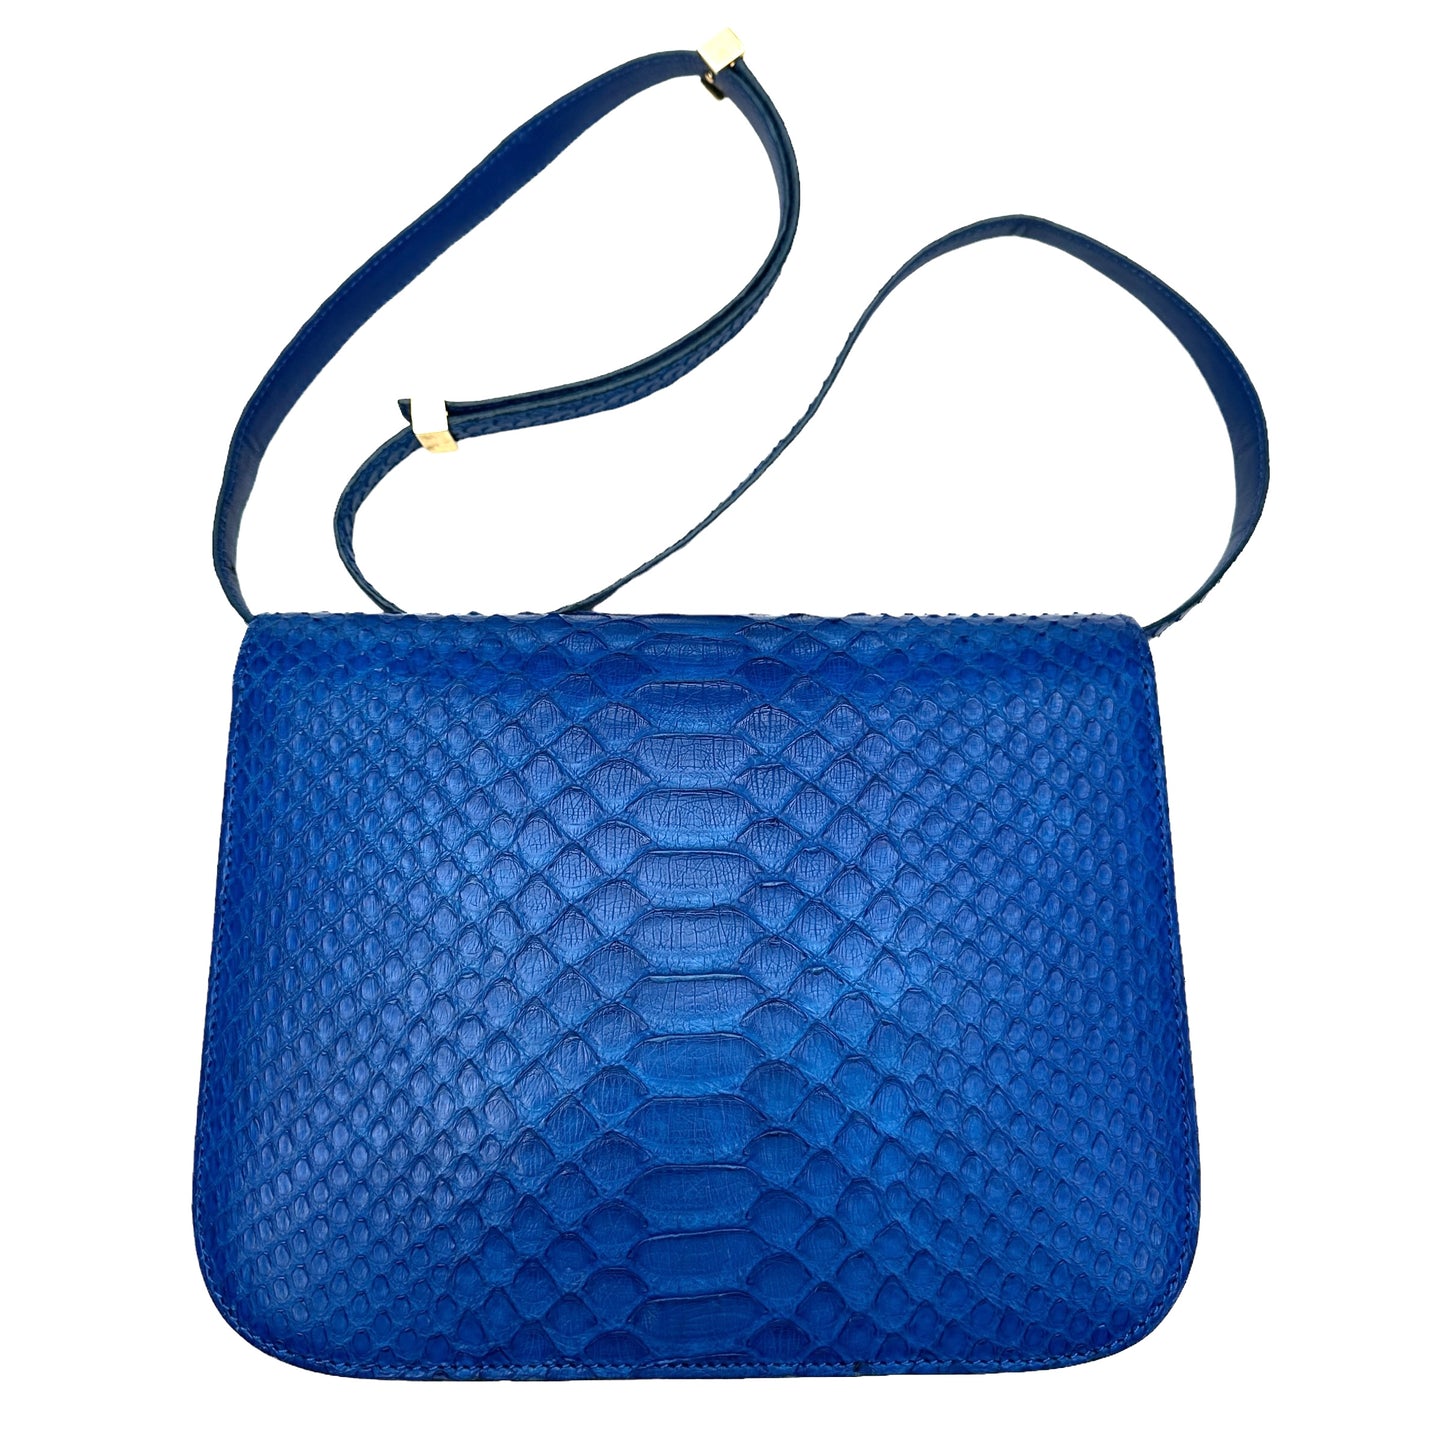 Blue Python Leather Box Bag